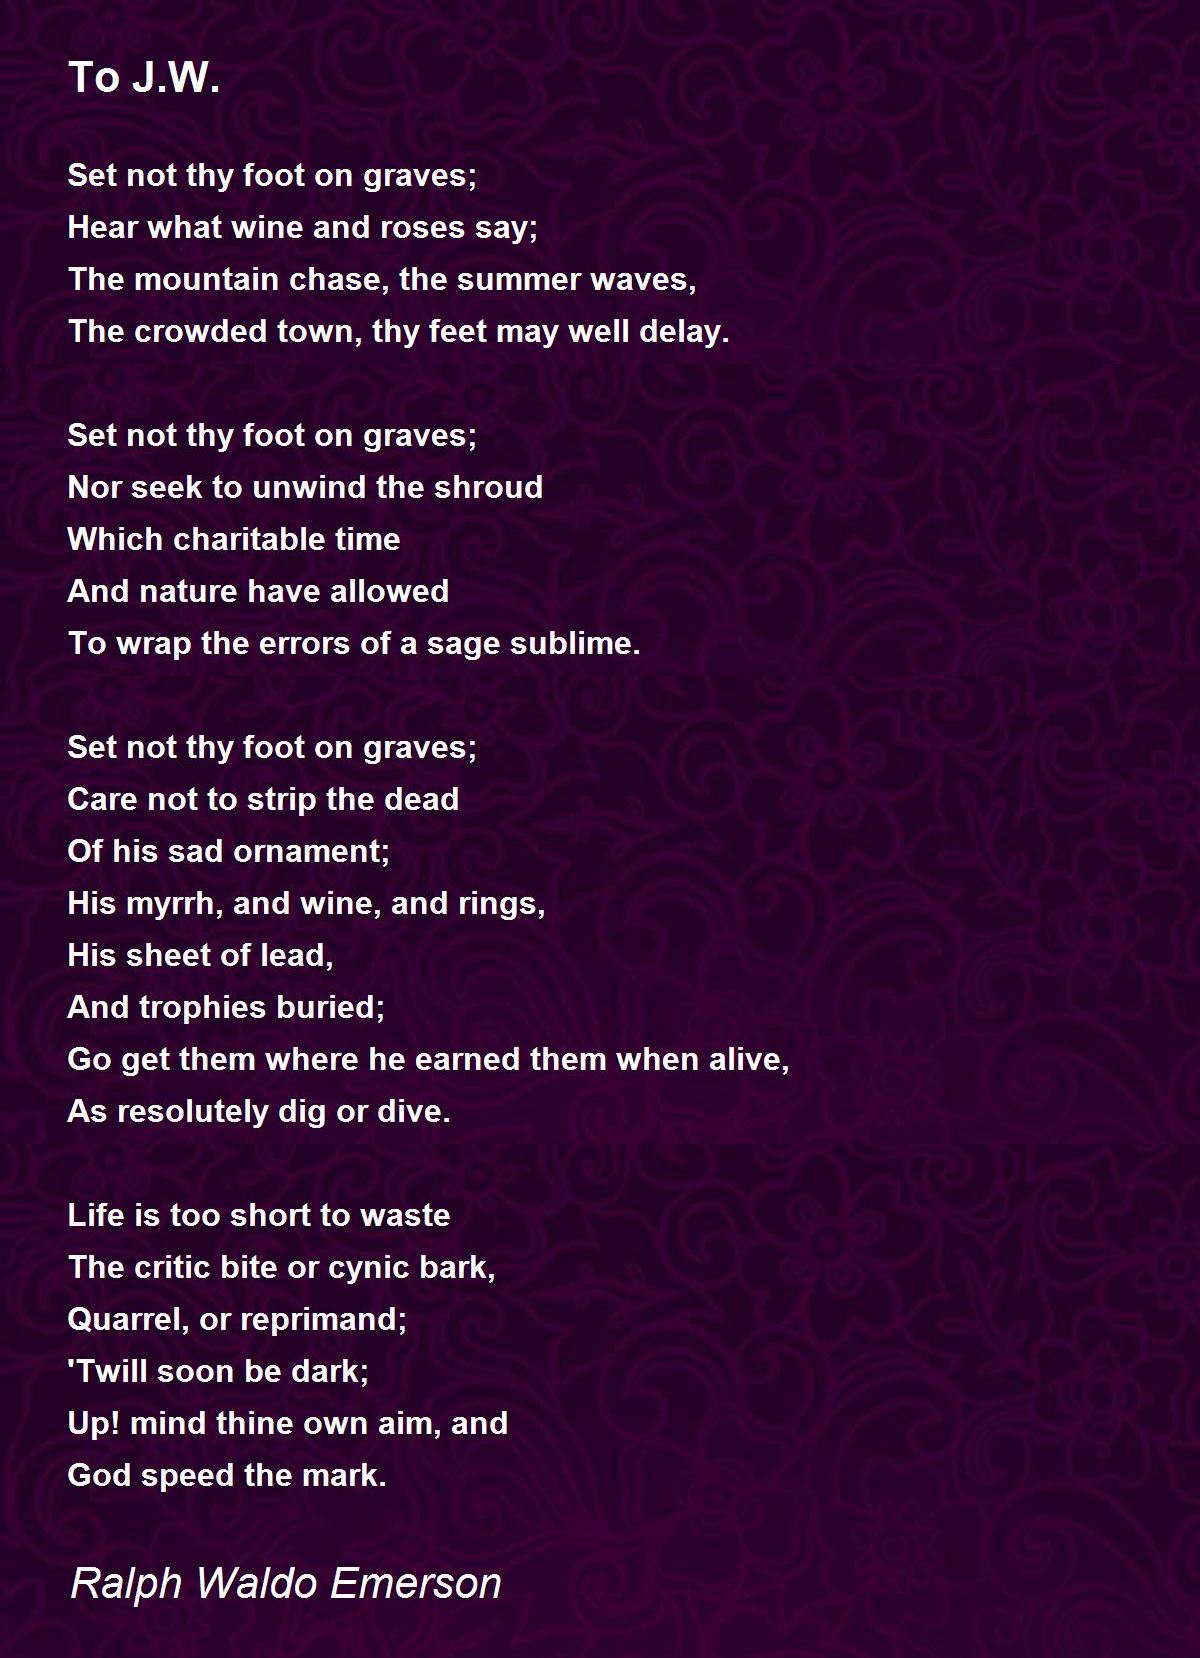 To J.W. Poem by Ralph Waldo Emerson - Poem Hunter